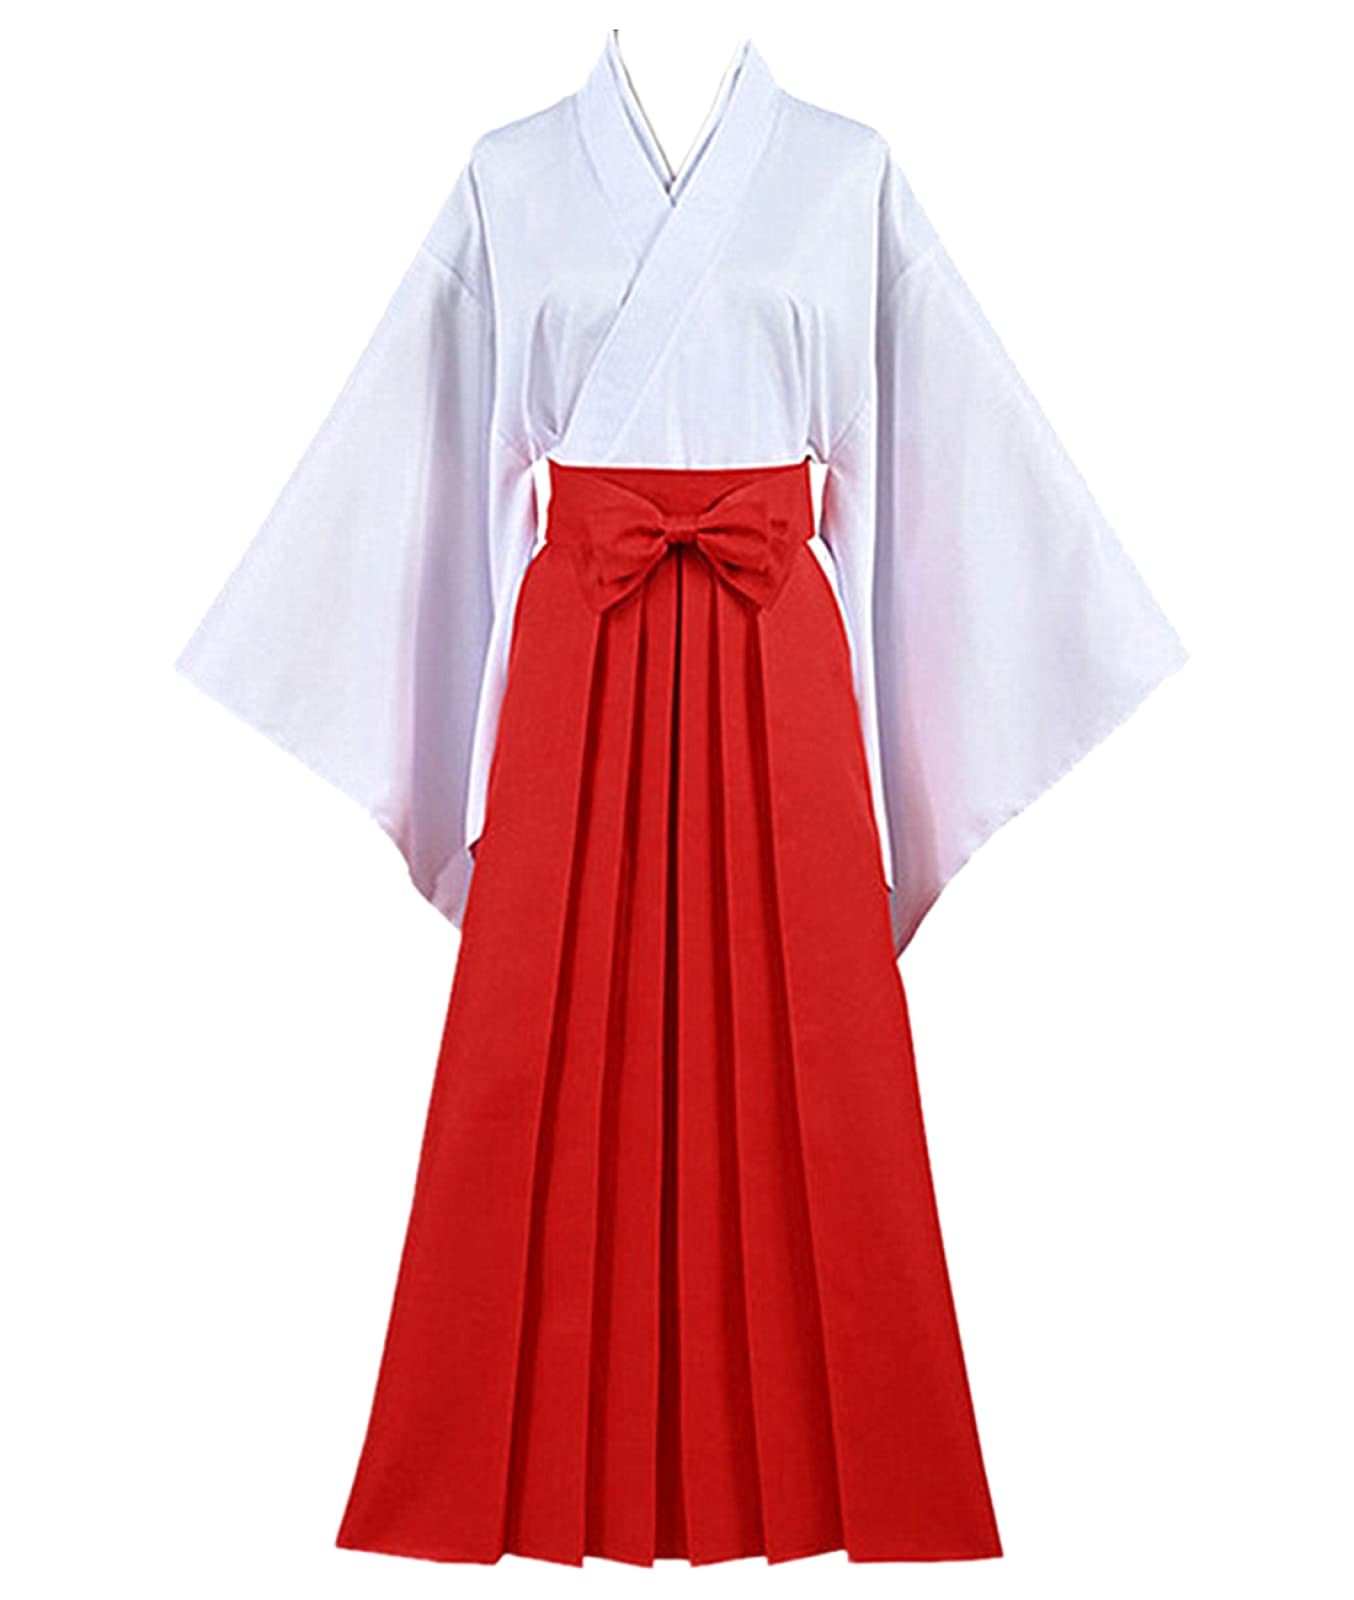 LHHZDH Jujutsu Kaisen Cosplay Iori Utahime Outfits, Frauen Kimono Kleid Kostüm Anzug für Anime Fans Cosplay,rot,L